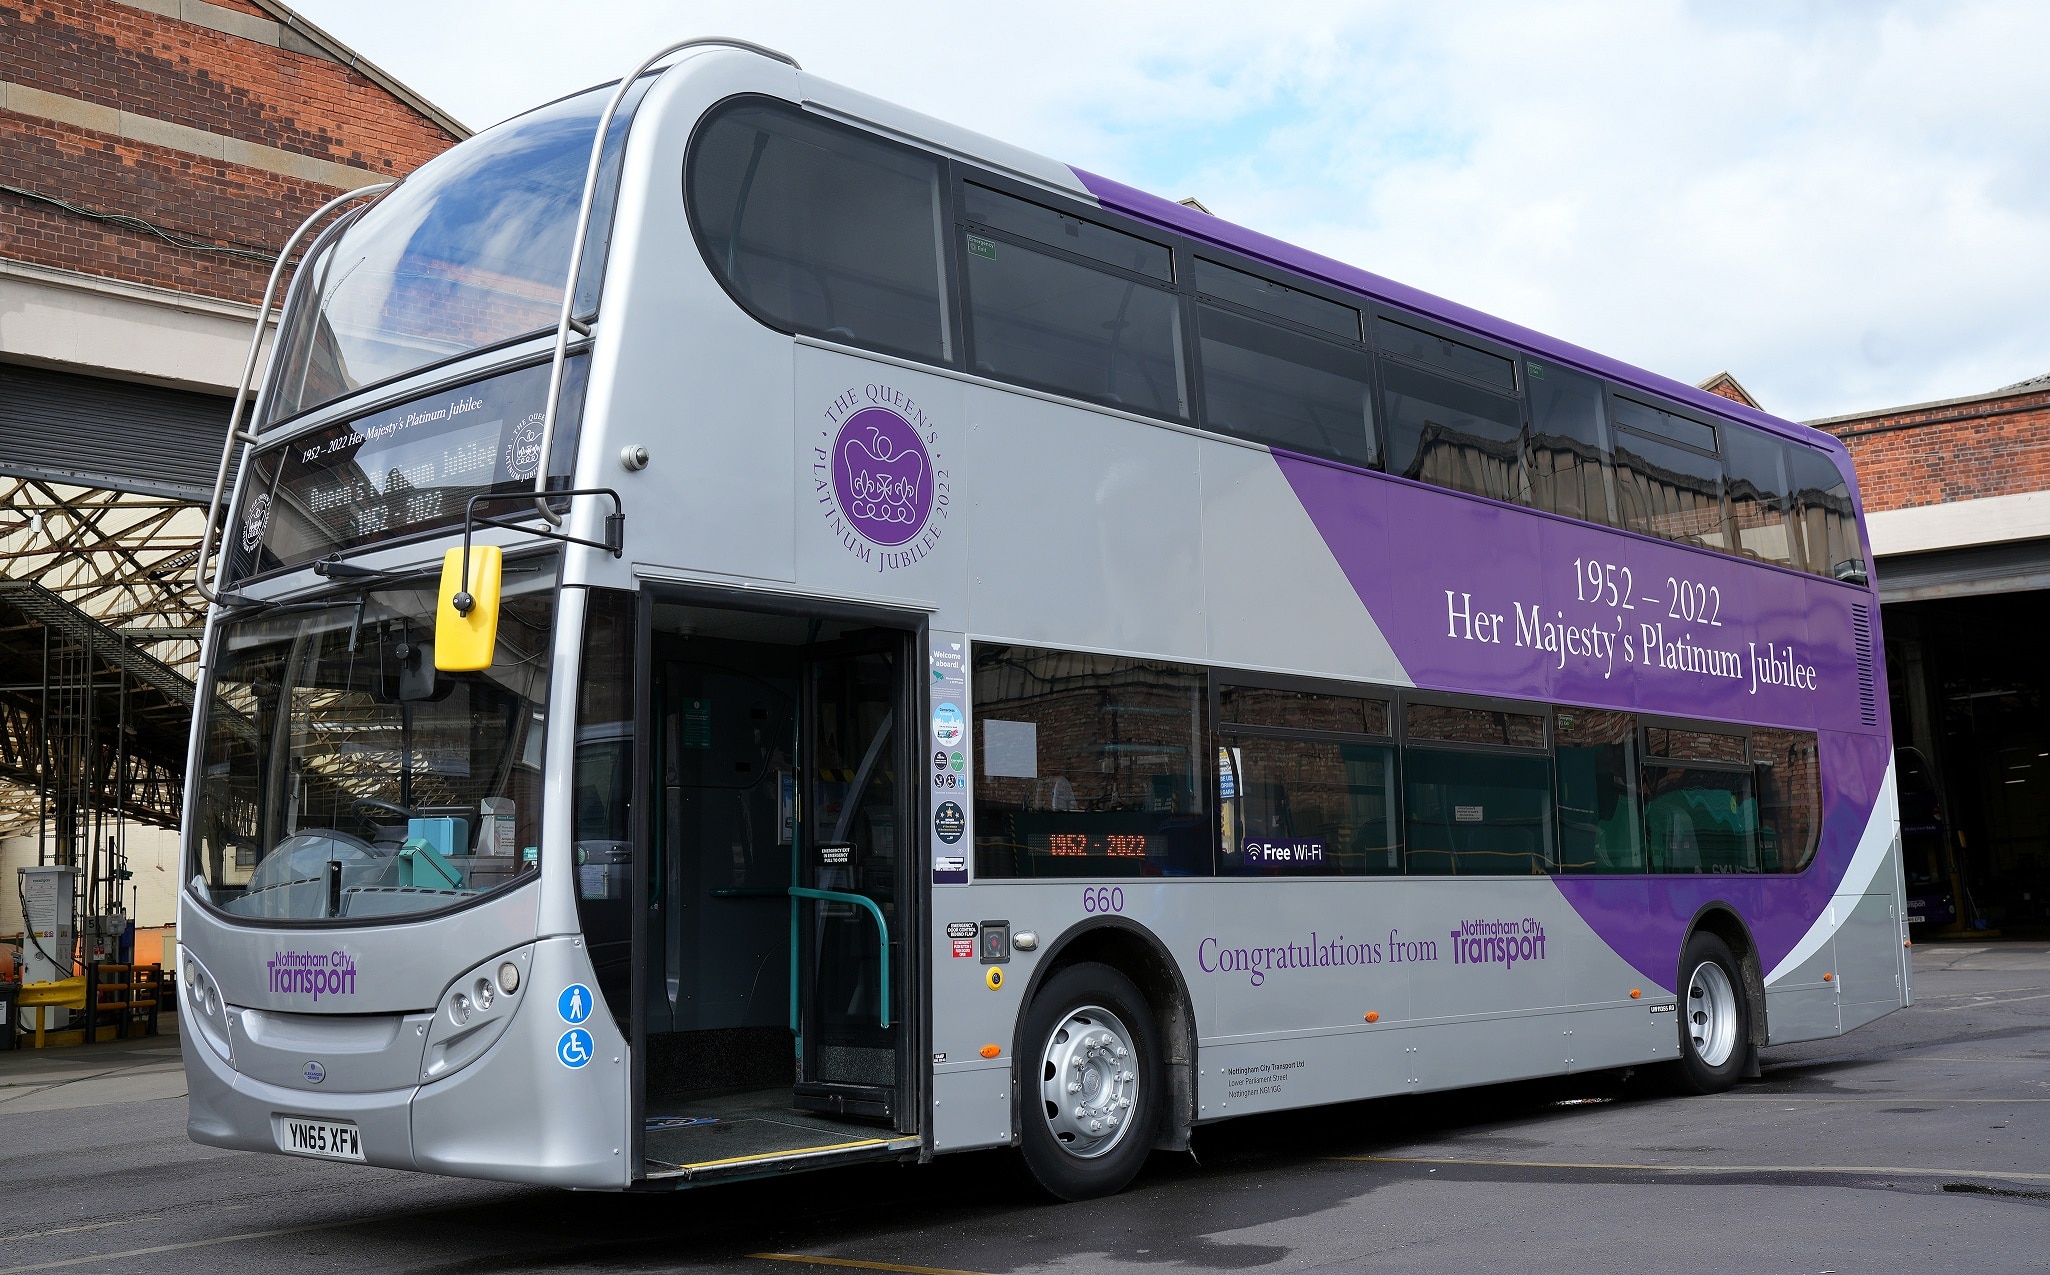 Nottingham City Transport Platinum Jubilee bus